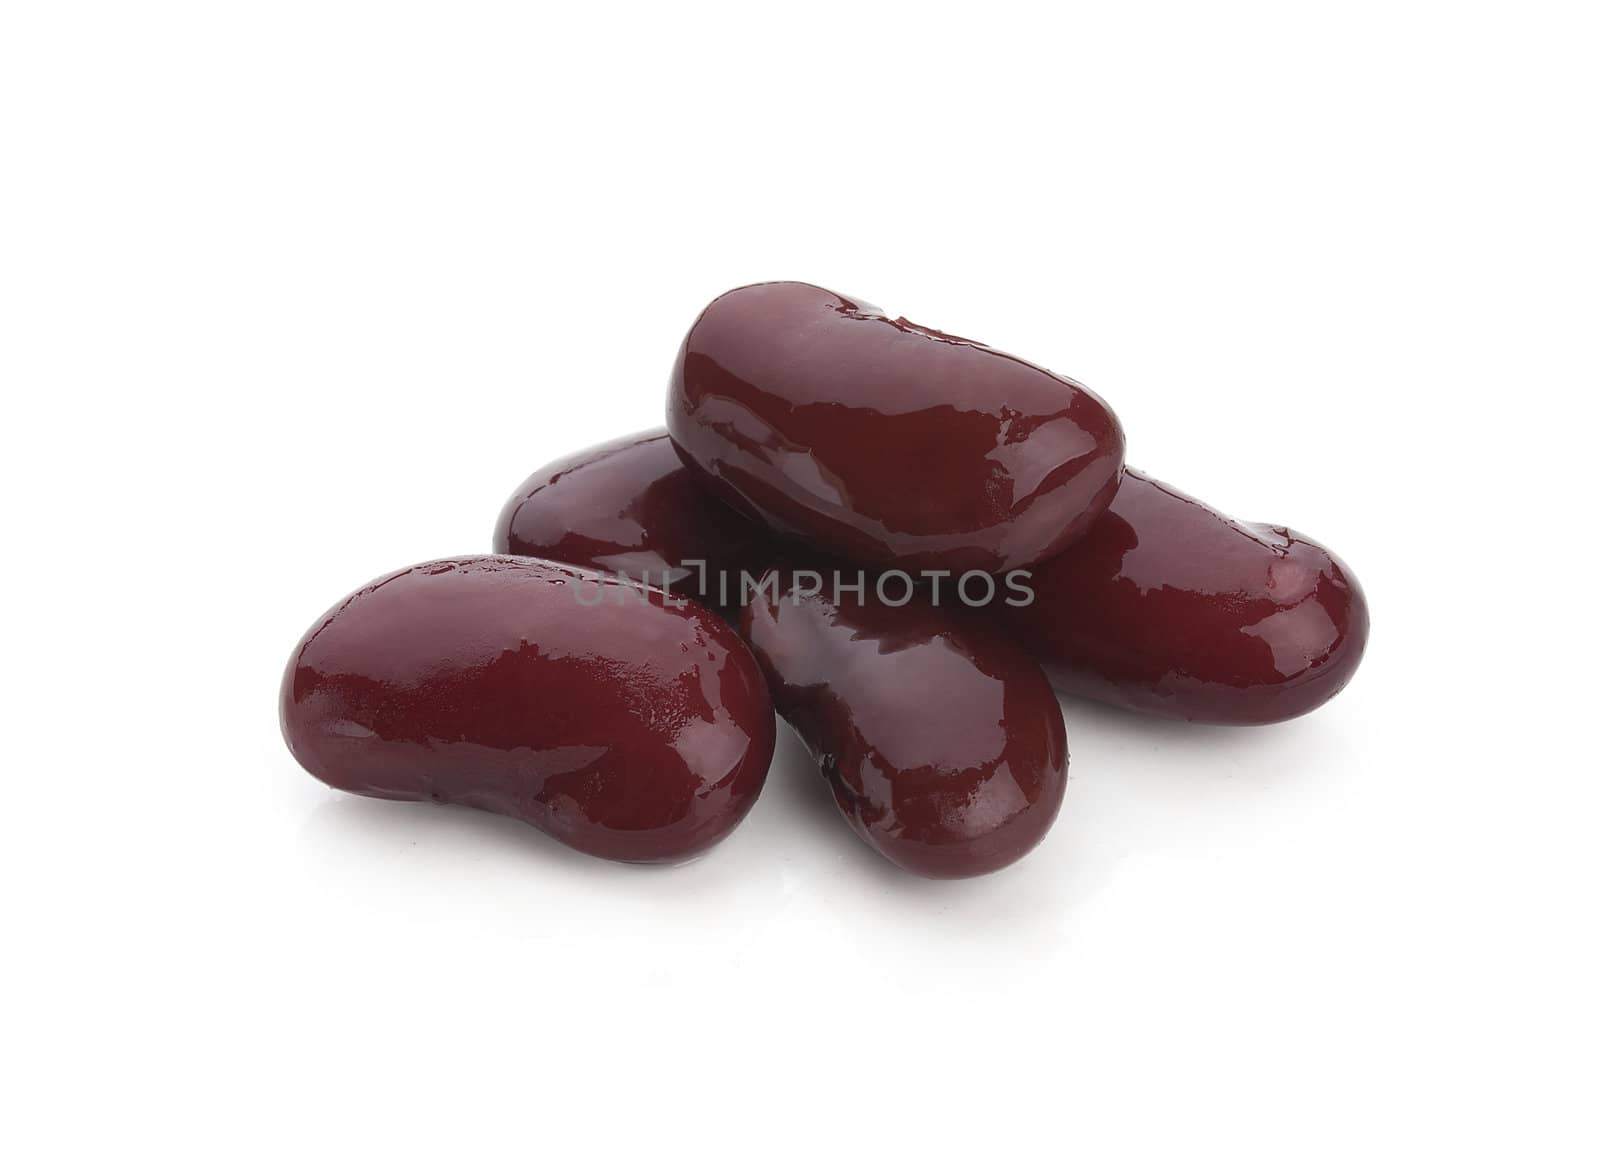 Isolated handfull of red kidney bean on the white